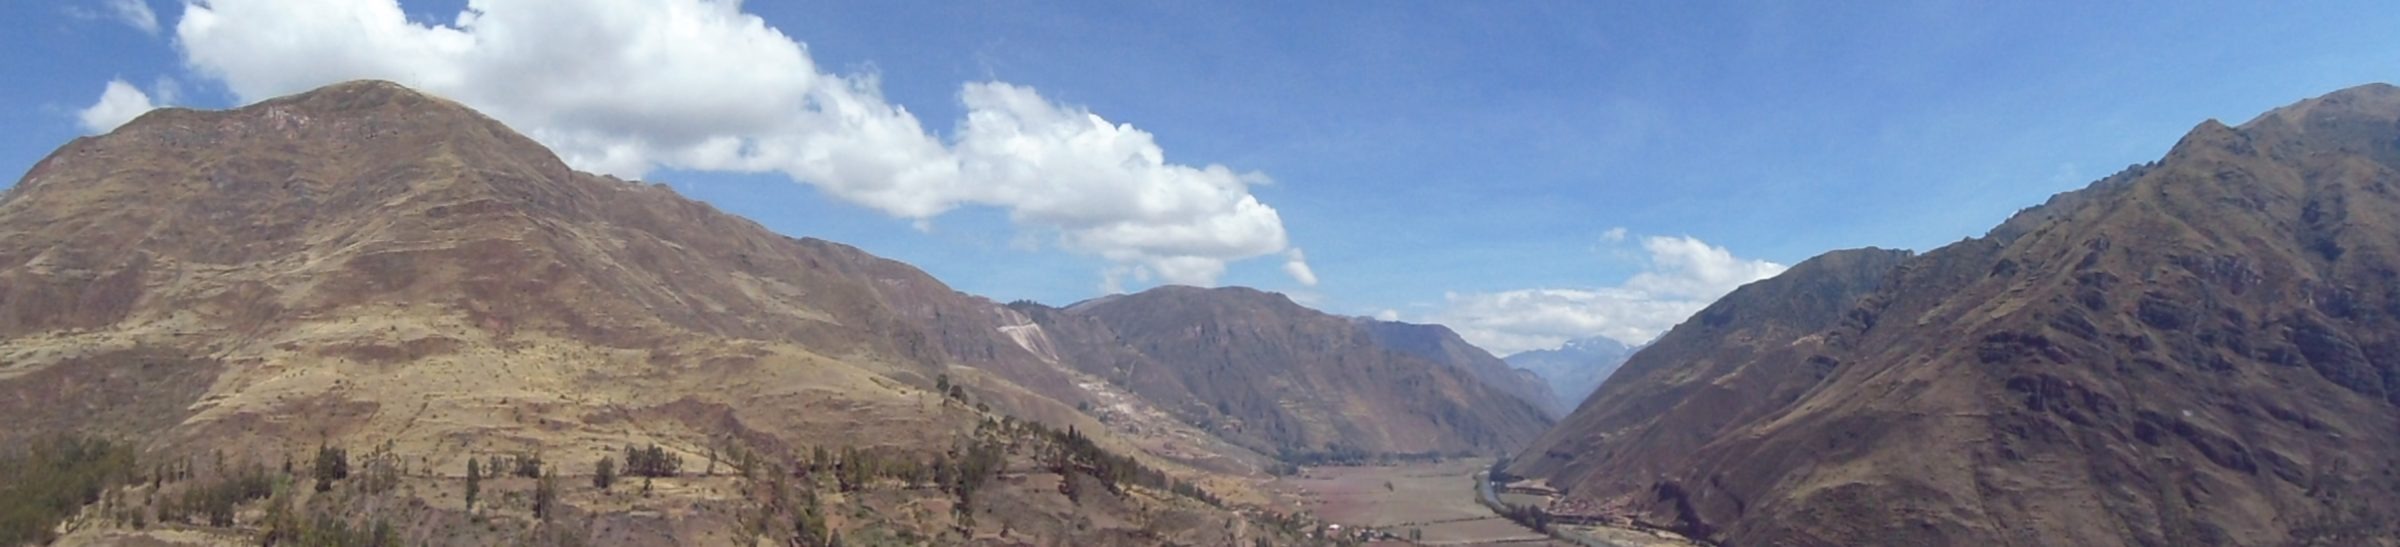 Sacret-Valley-Peru